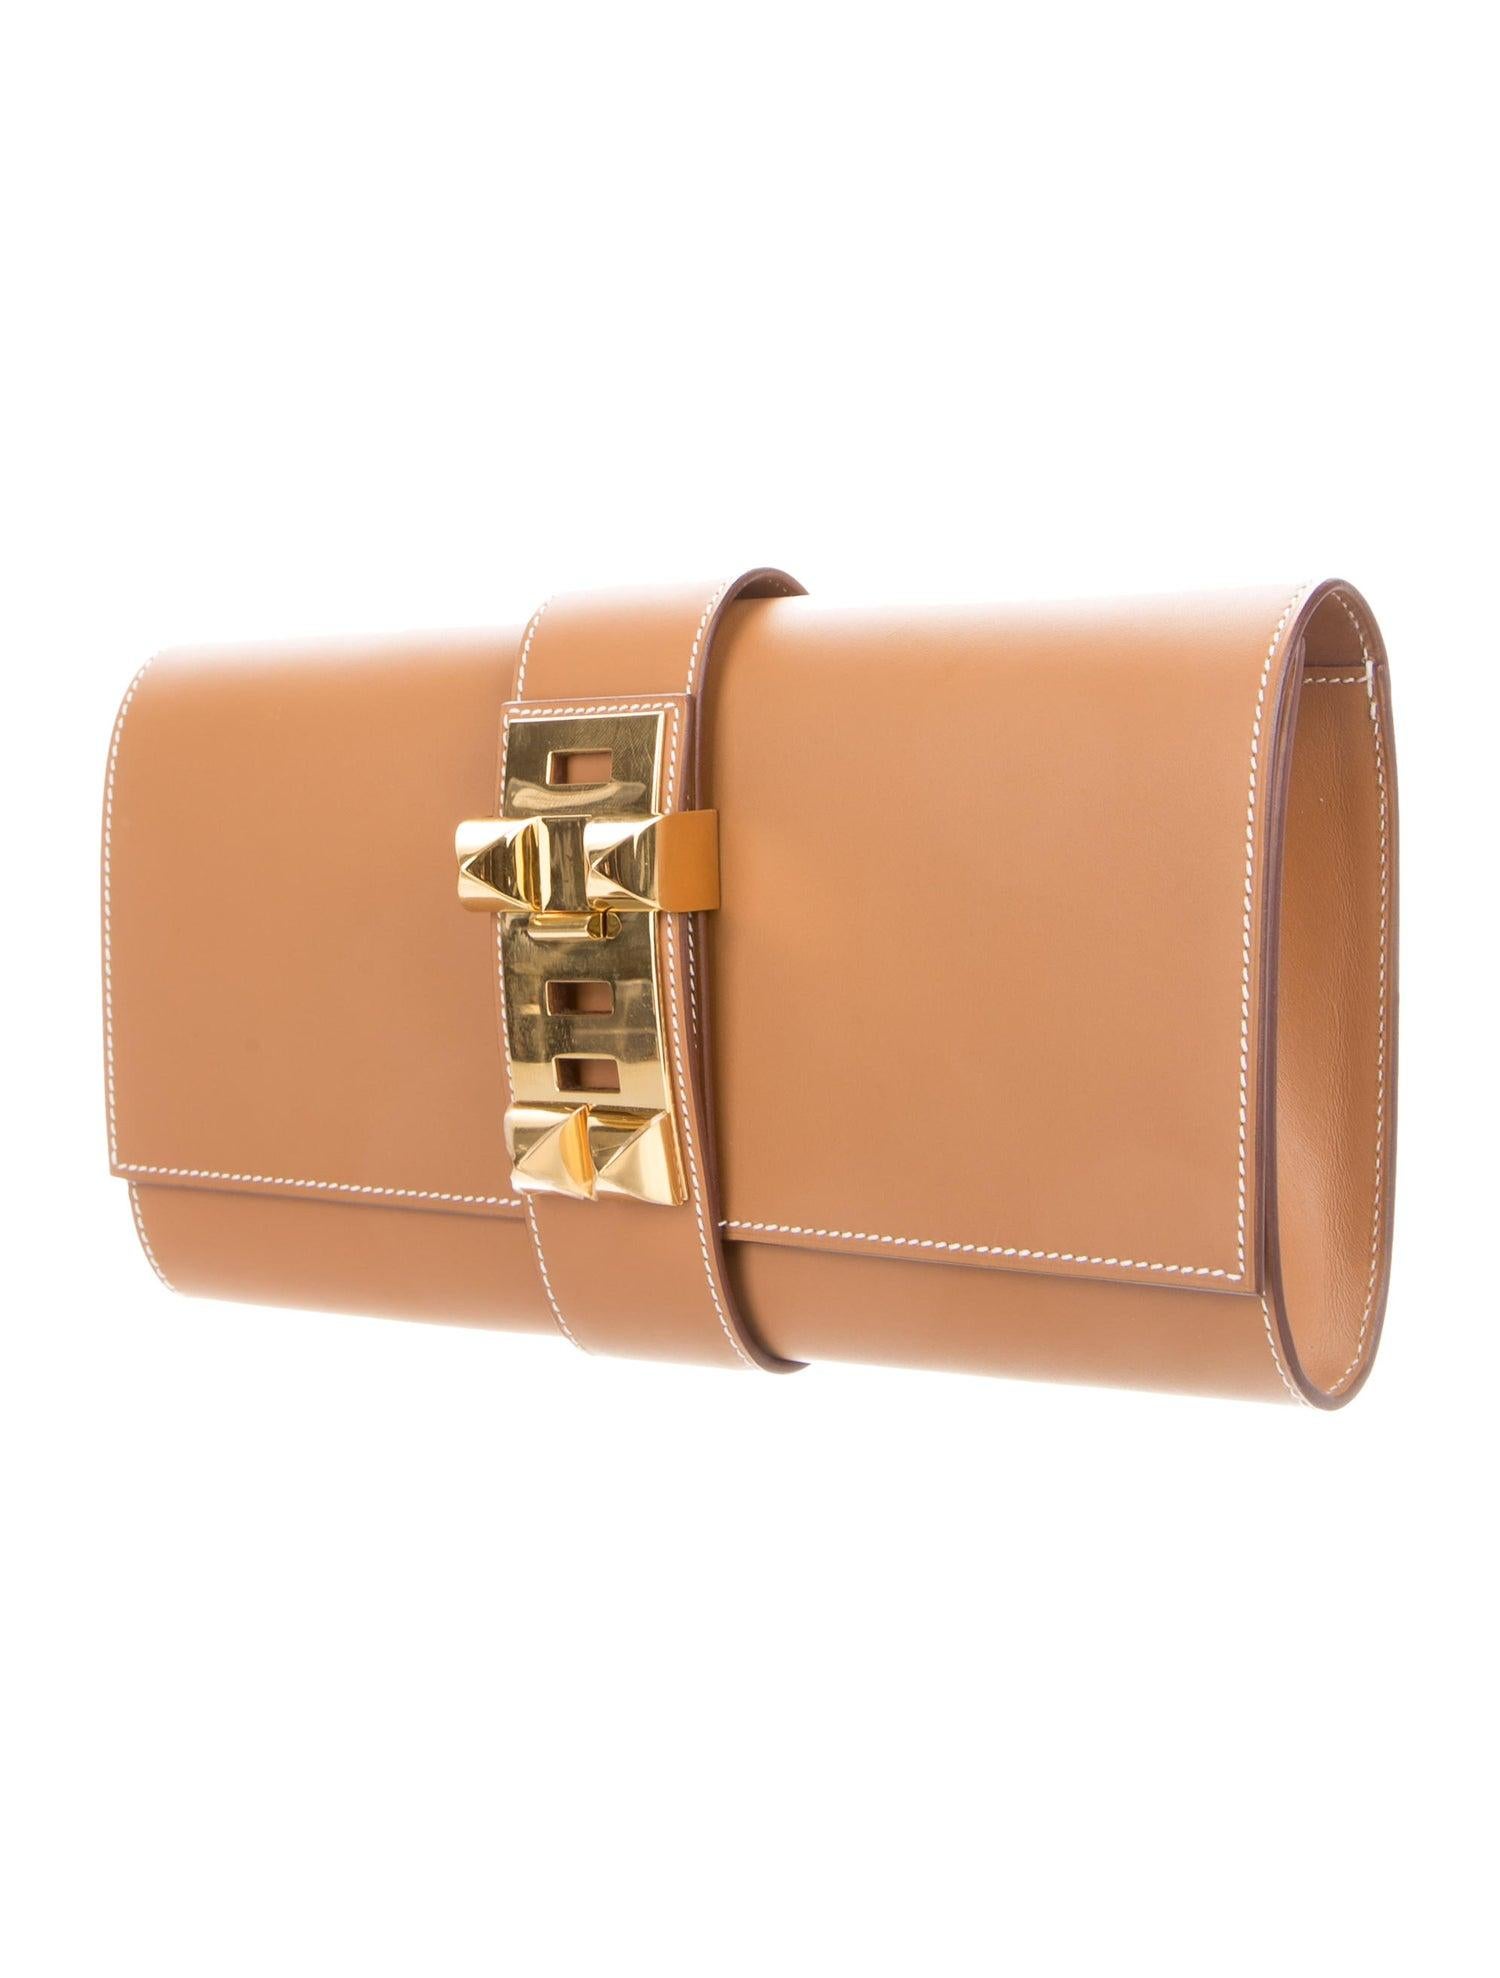 Women's Hermes NEW Cognac Leather Gold Collier Evening Envelope Clutch Flap Bag 